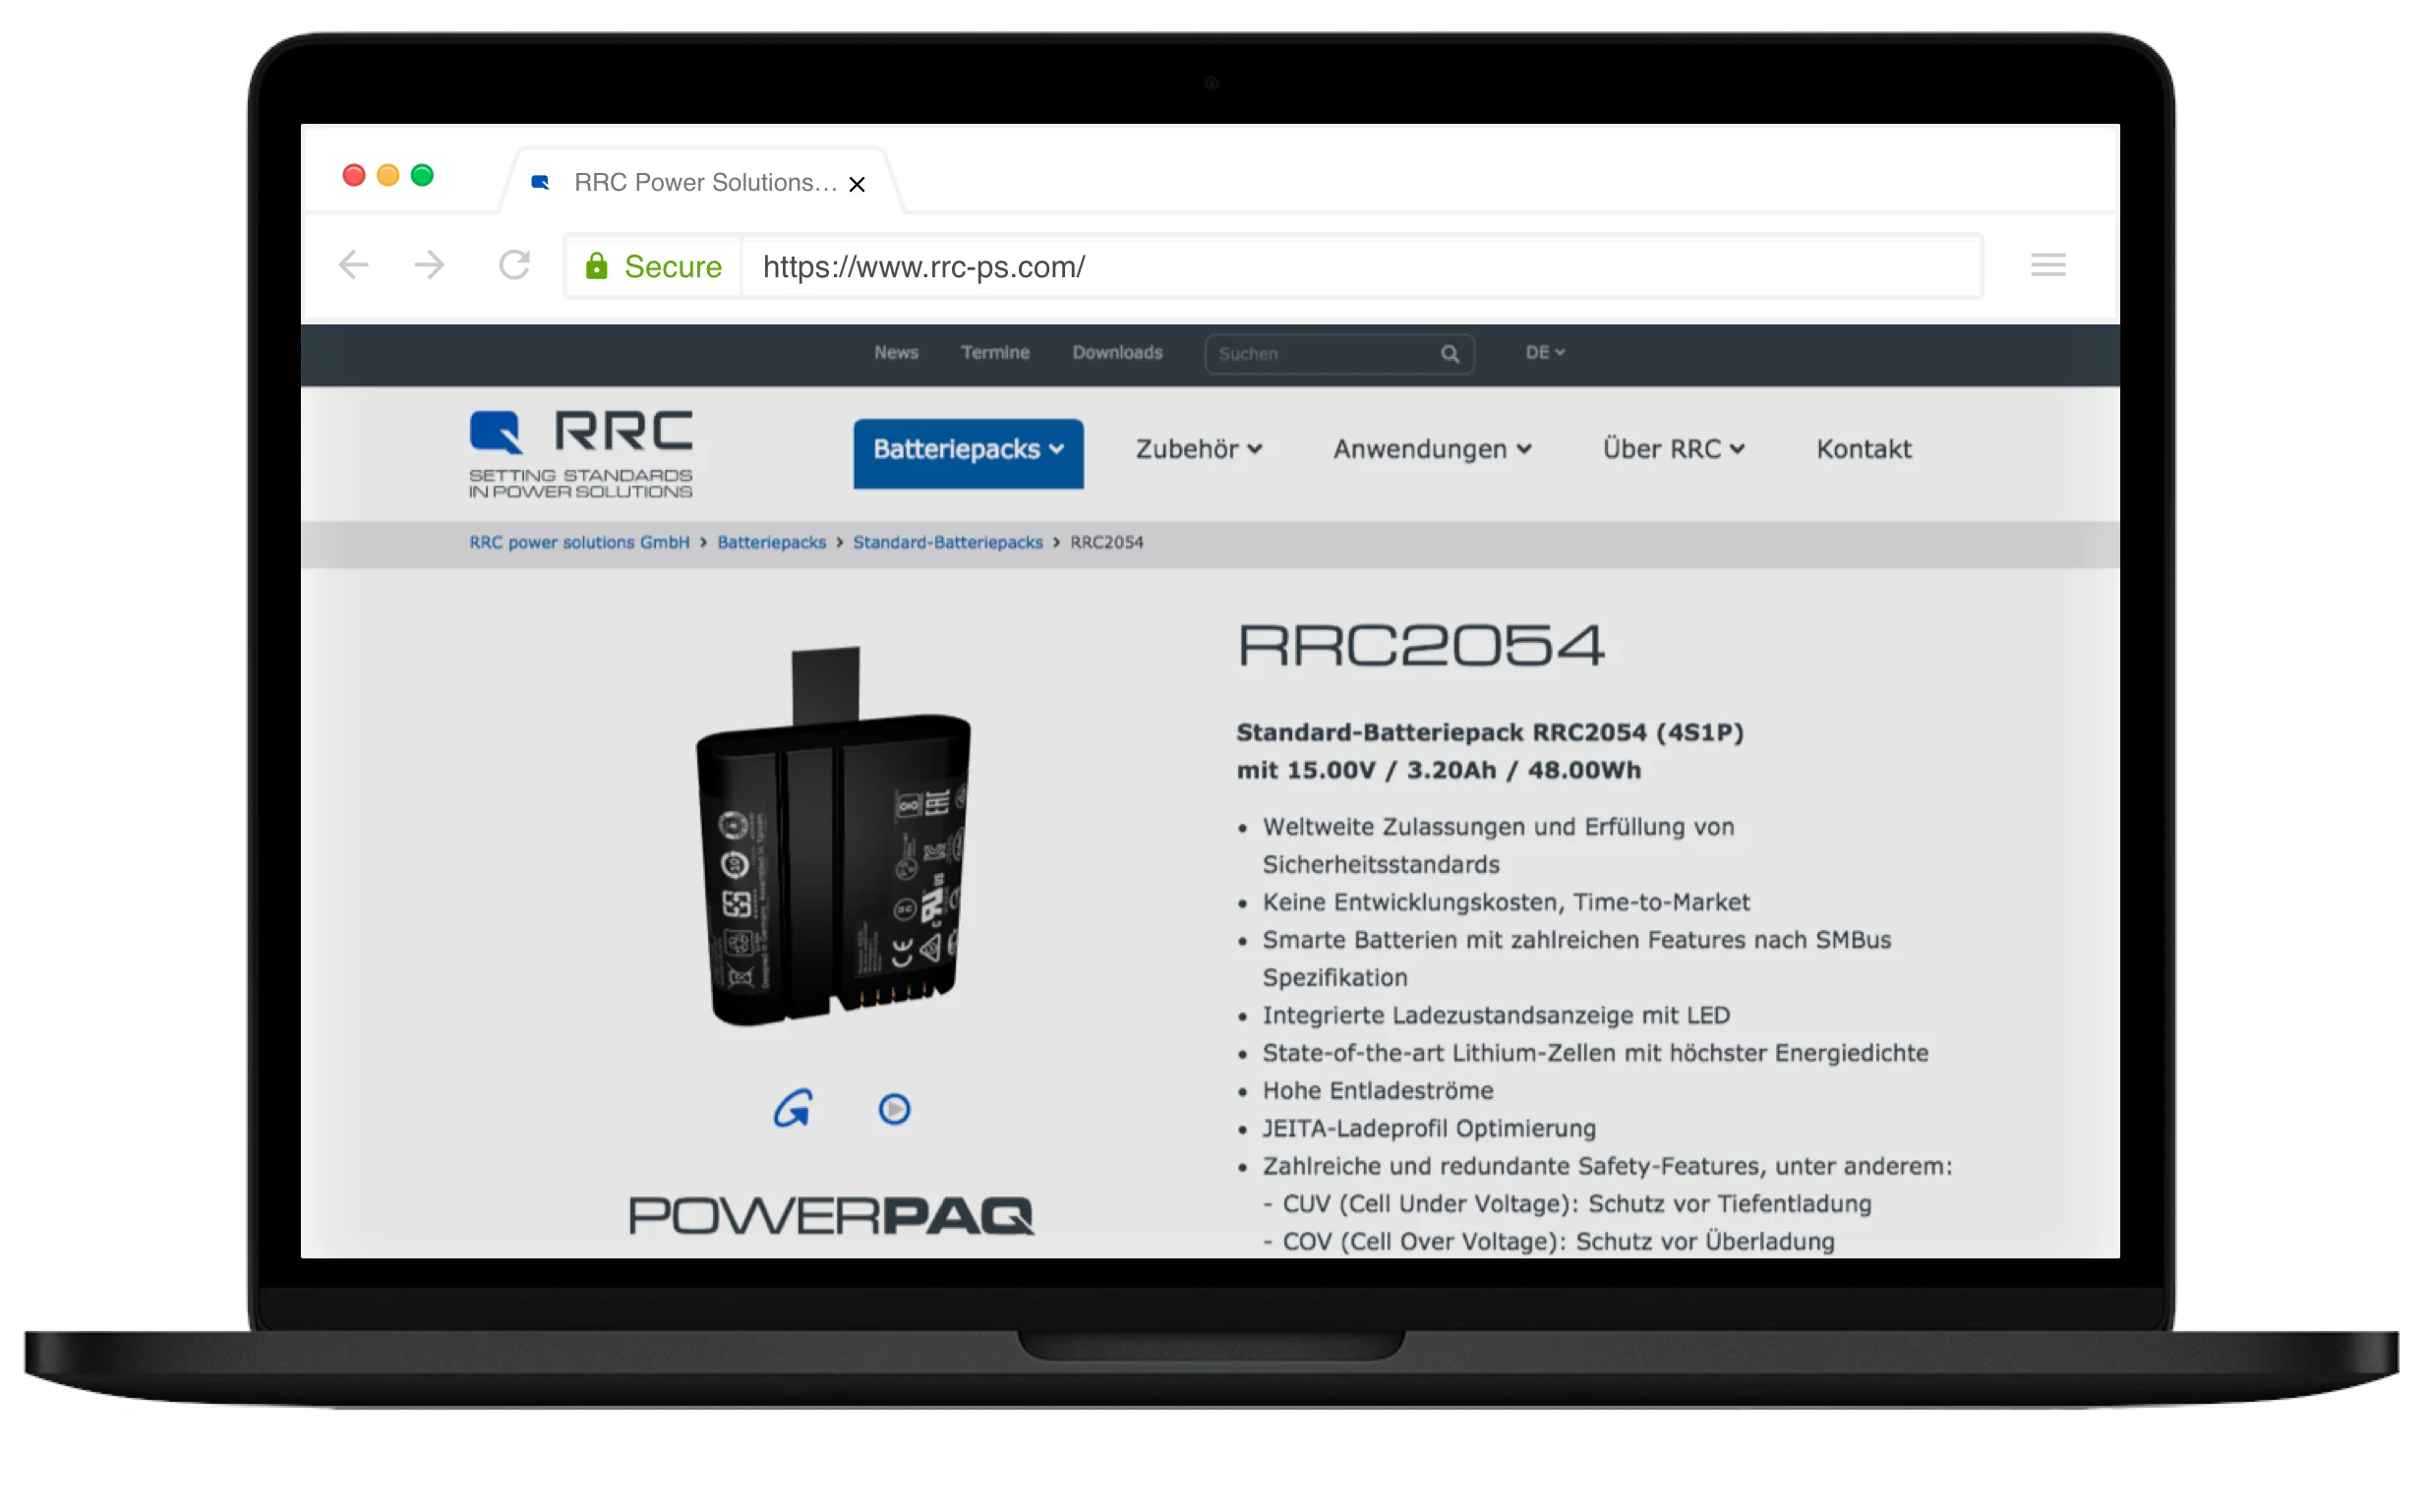 RRC power solutions Corporate Website mit dreidimensionaler Produktpräsentation